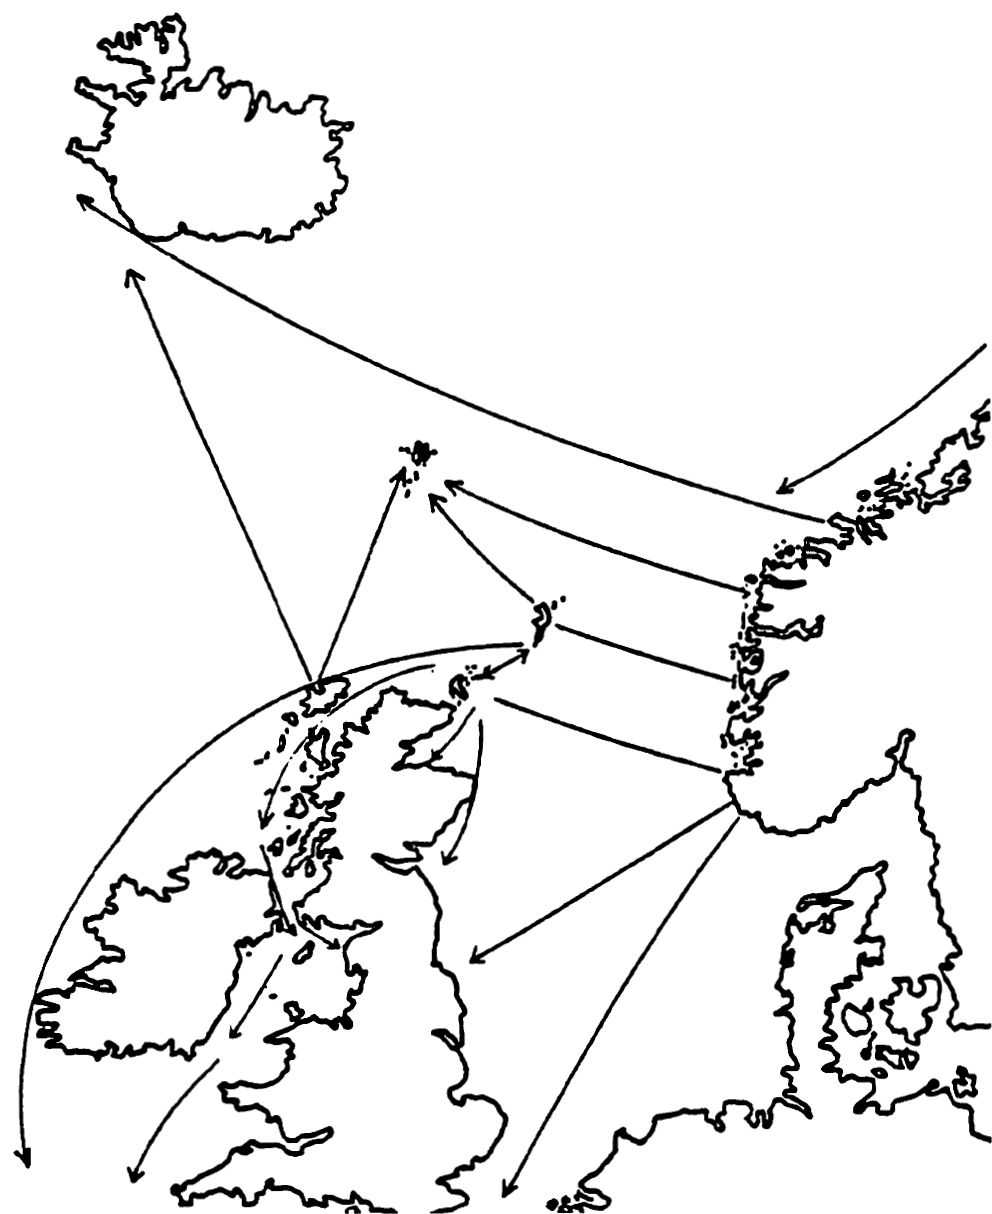 Vikinské obchodní trasy v severním Atlantiku (zdroj: Steffen Stummann Hansen:  Aspects of Viking-Age Society in Shetland and the Faroe Islands. In: D. Waugh (ed.): Shetland's Northern Links: Language and History. Lerwick (: The Scottish Society for Northern Studies), 1996, s 118.)